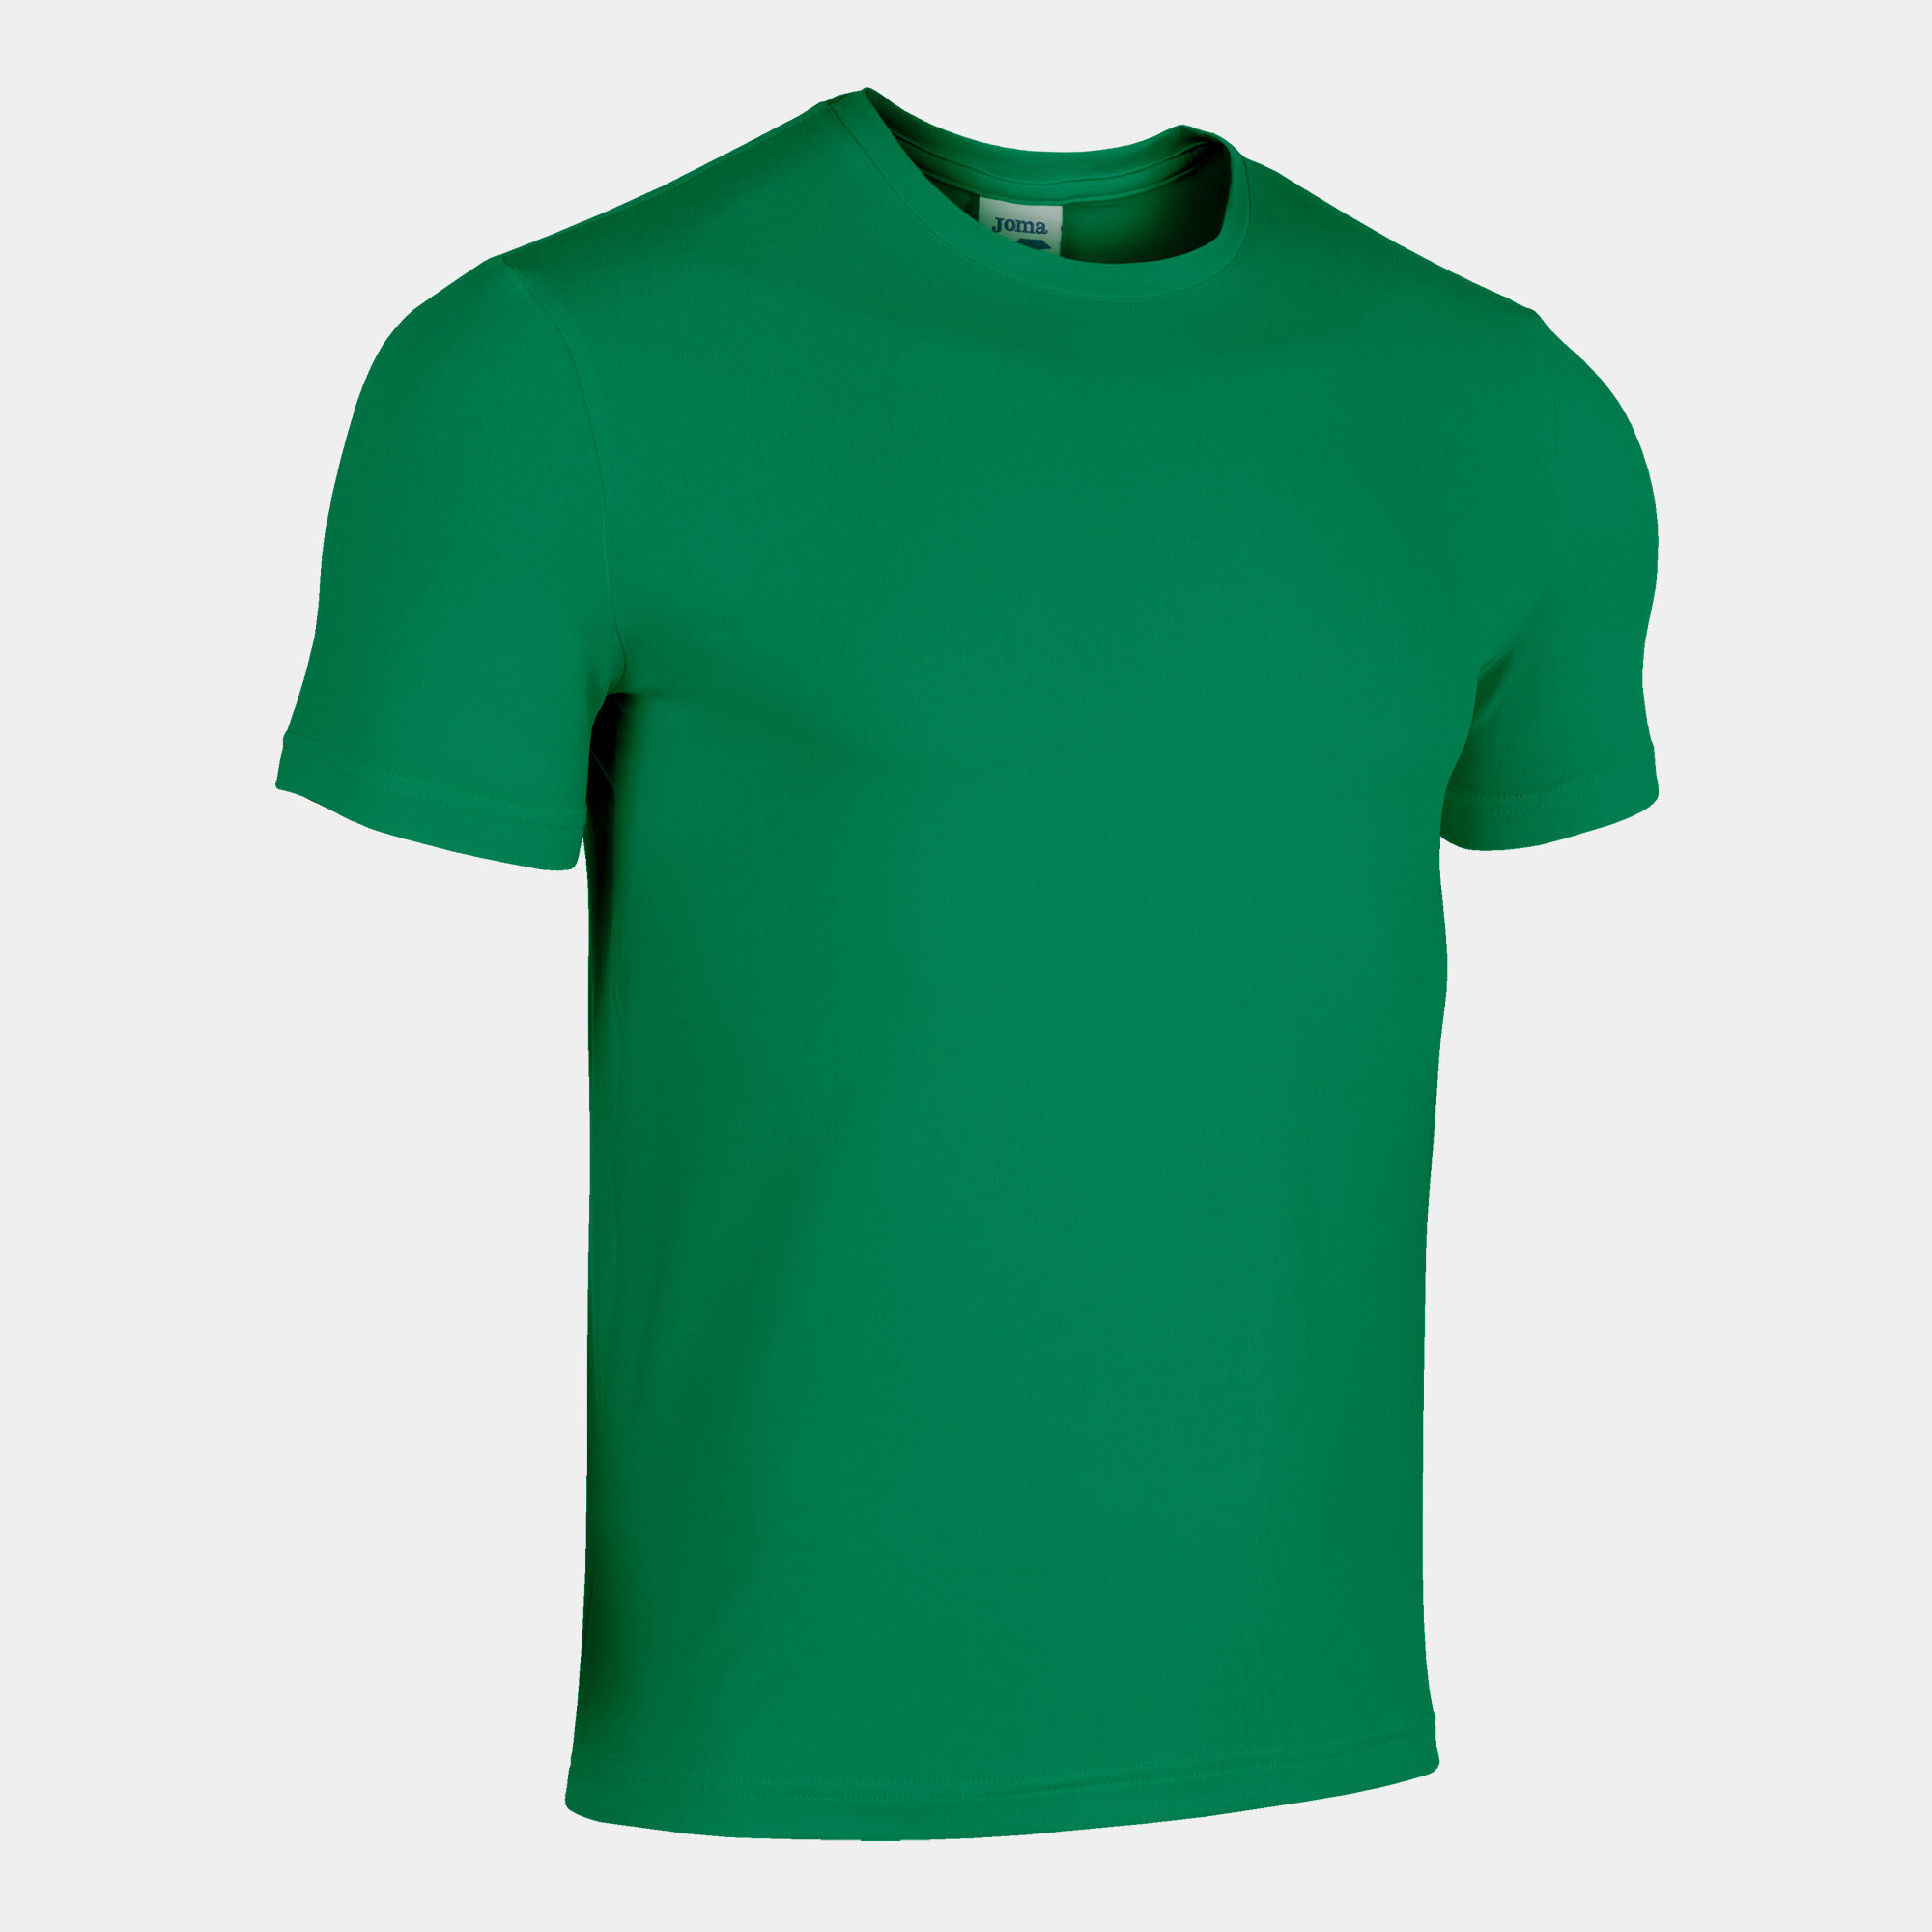 Camiseta manga corta hombre Sydney verde